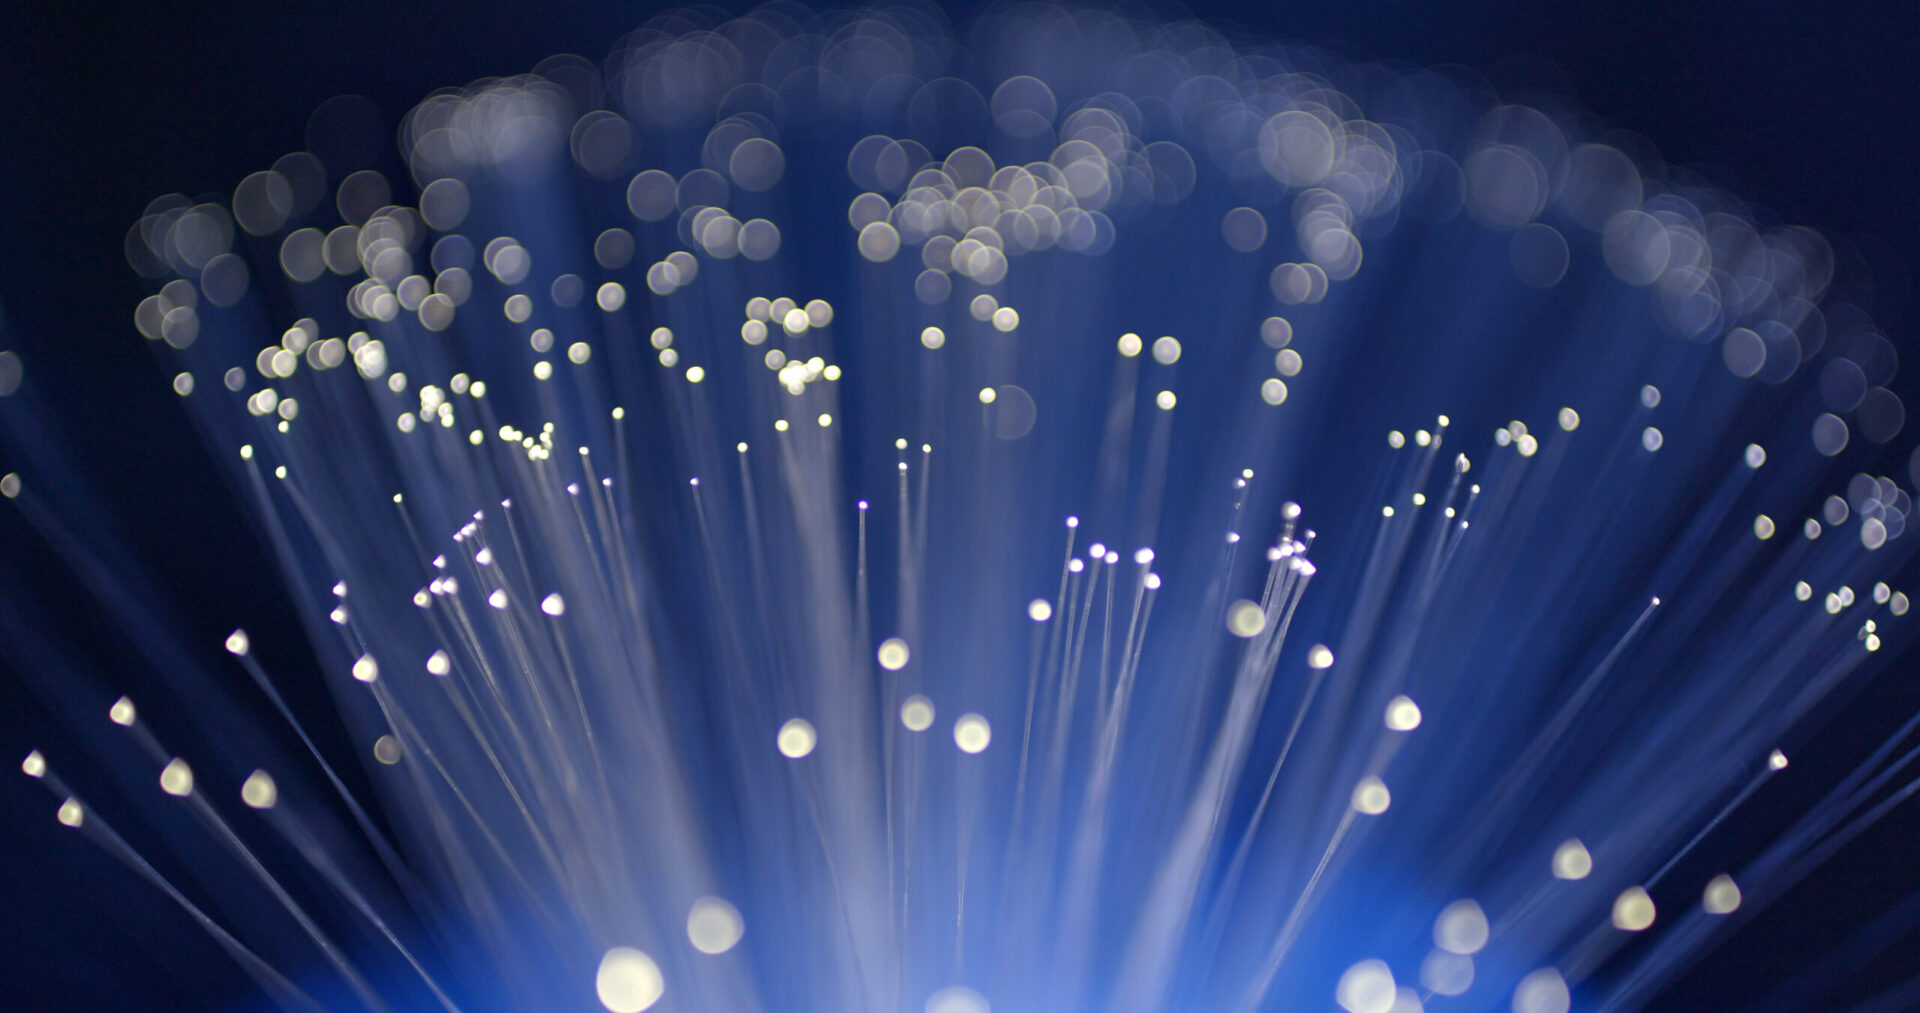 optical fiber light 2022 12 15 21 12 28 utc scaled